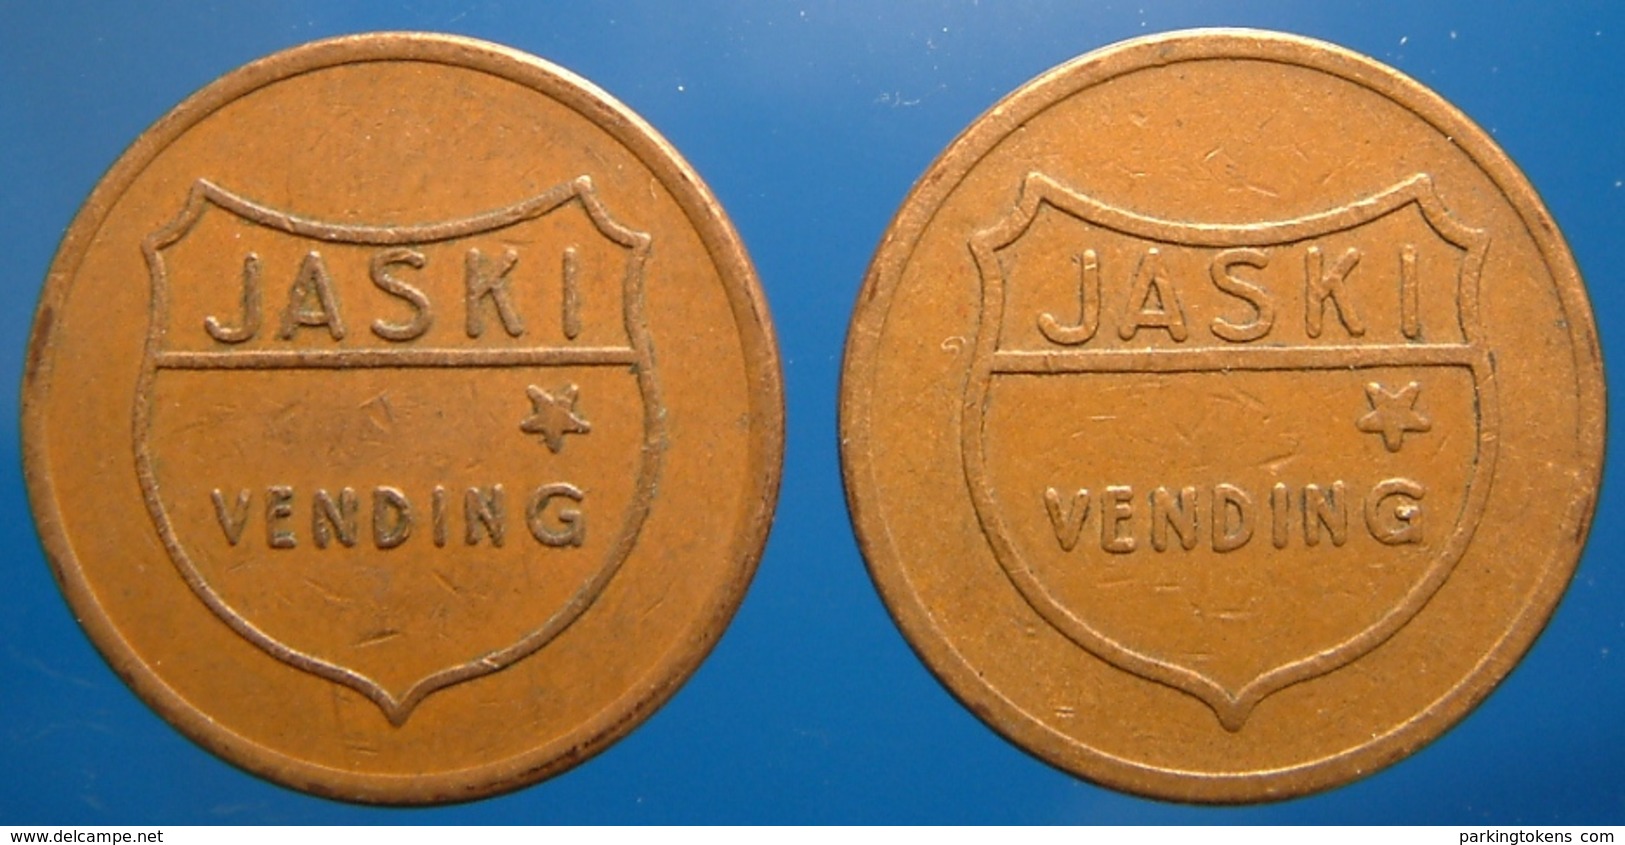 KB224-1 - JASKI VENDING - Hilversum. - Bz 20.0mm - Koffie Machine Penning - Coffee Machine Token - Professionnels/De Société